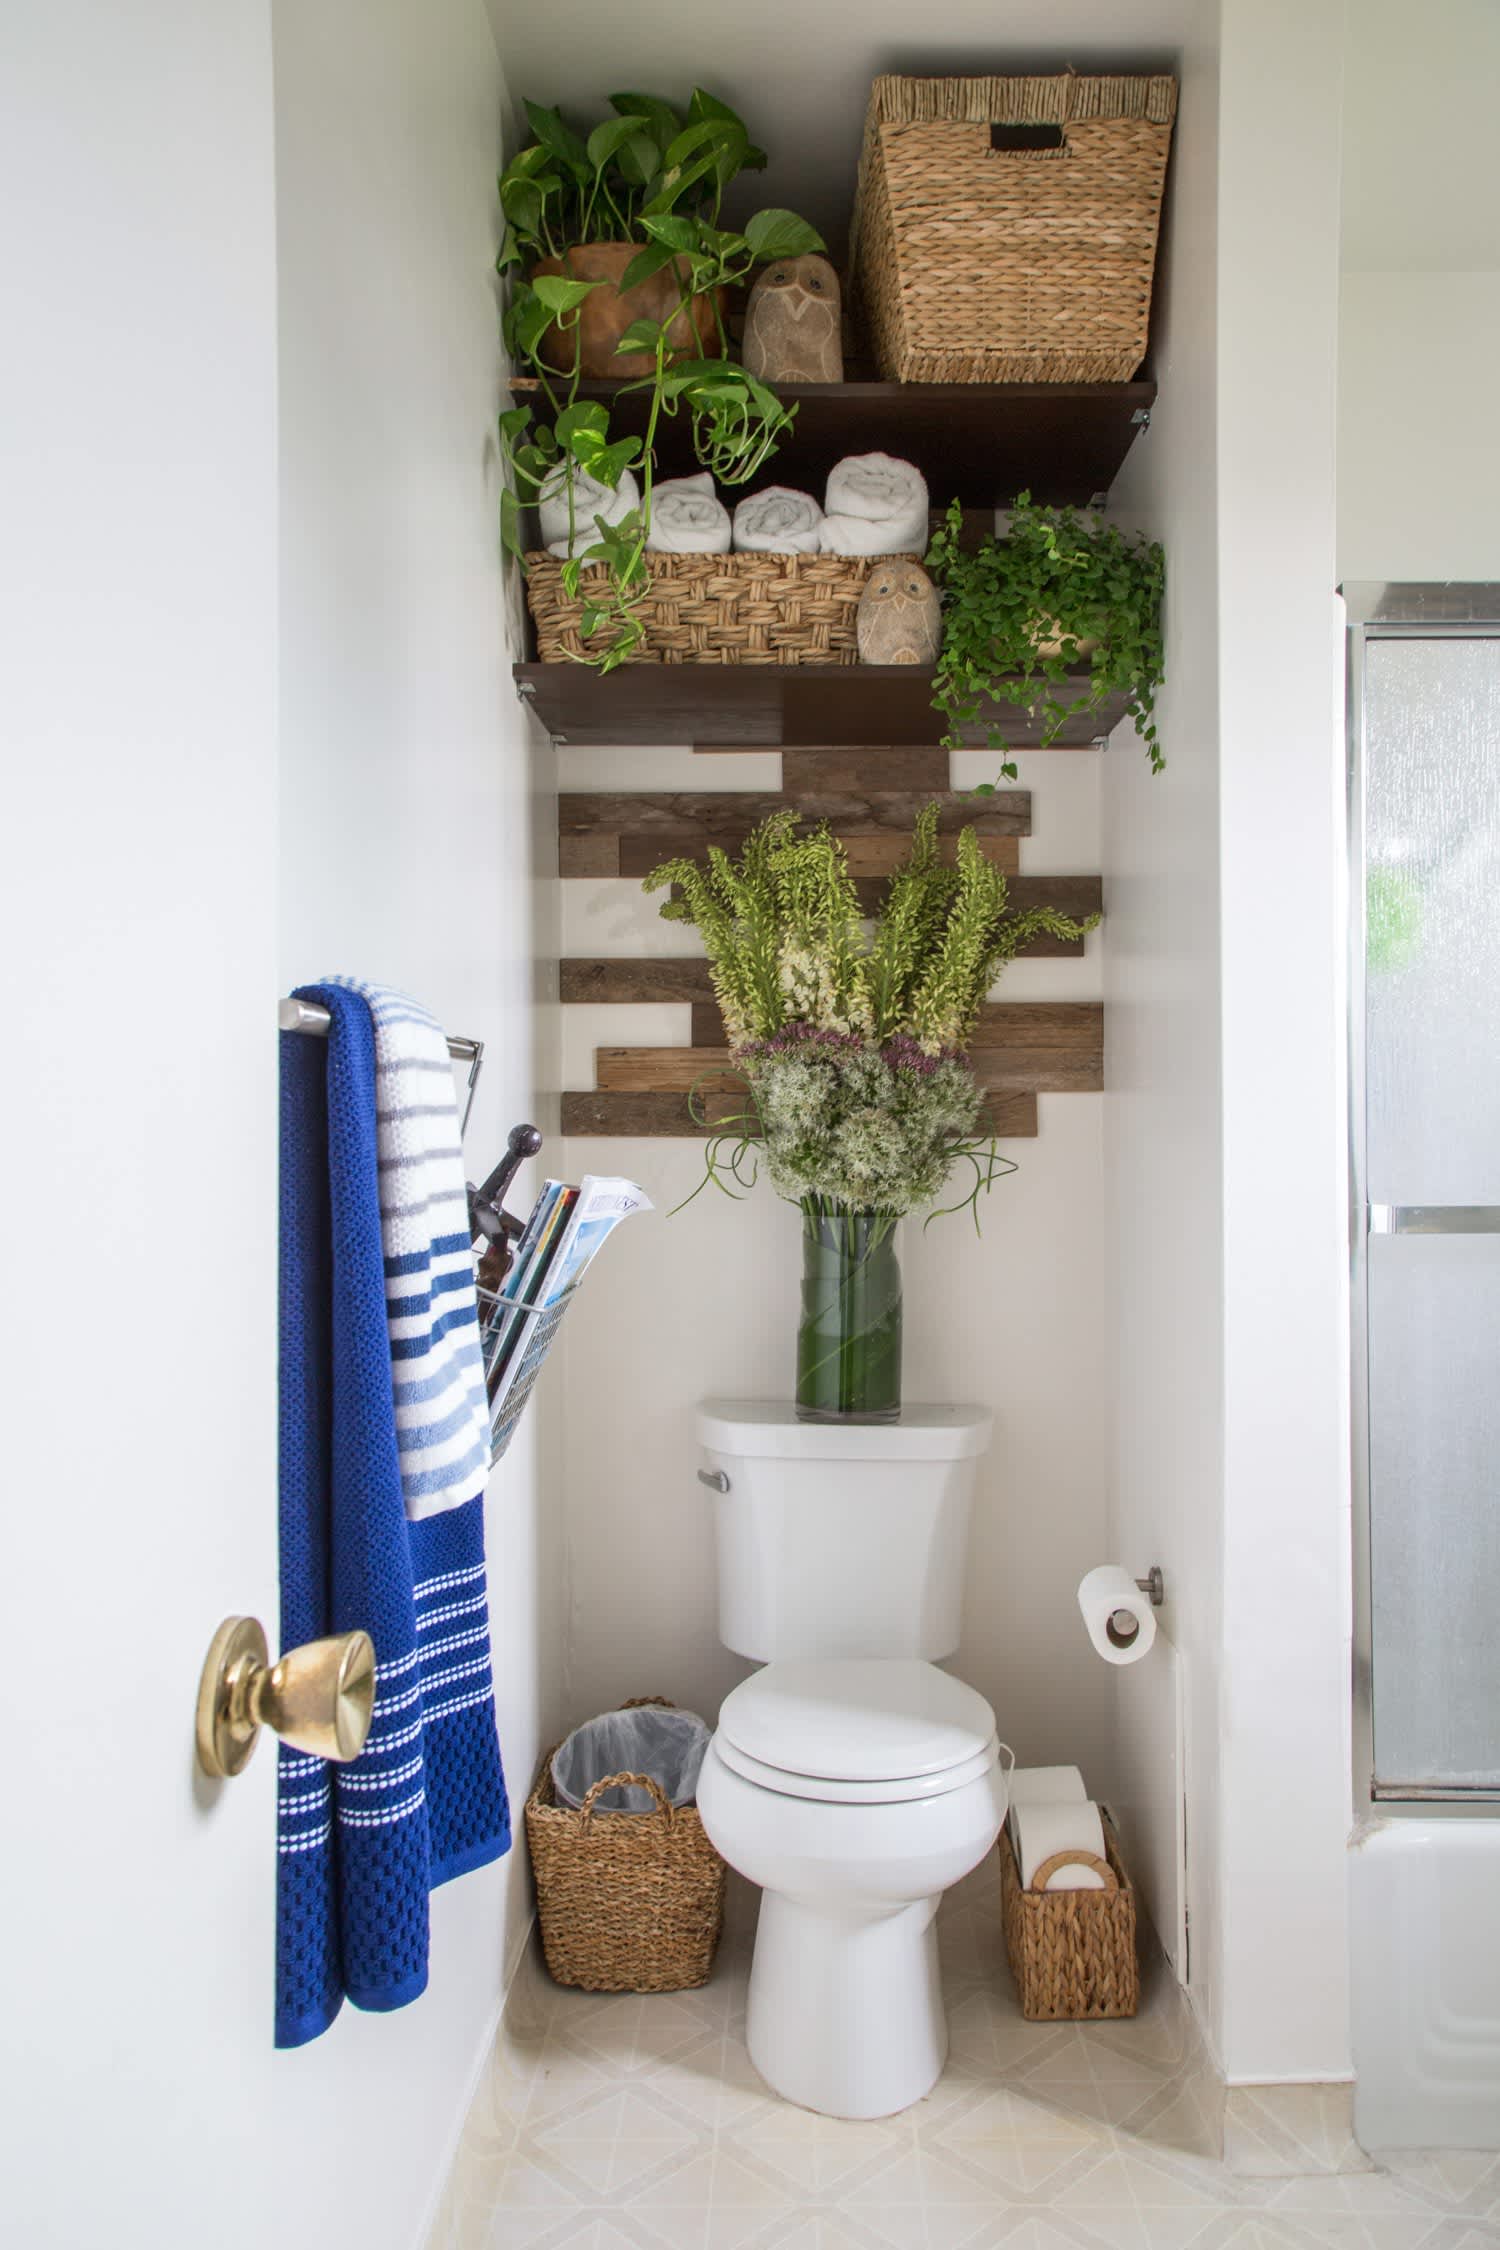 Half Bathroom Decor Ideas For Small Spaces